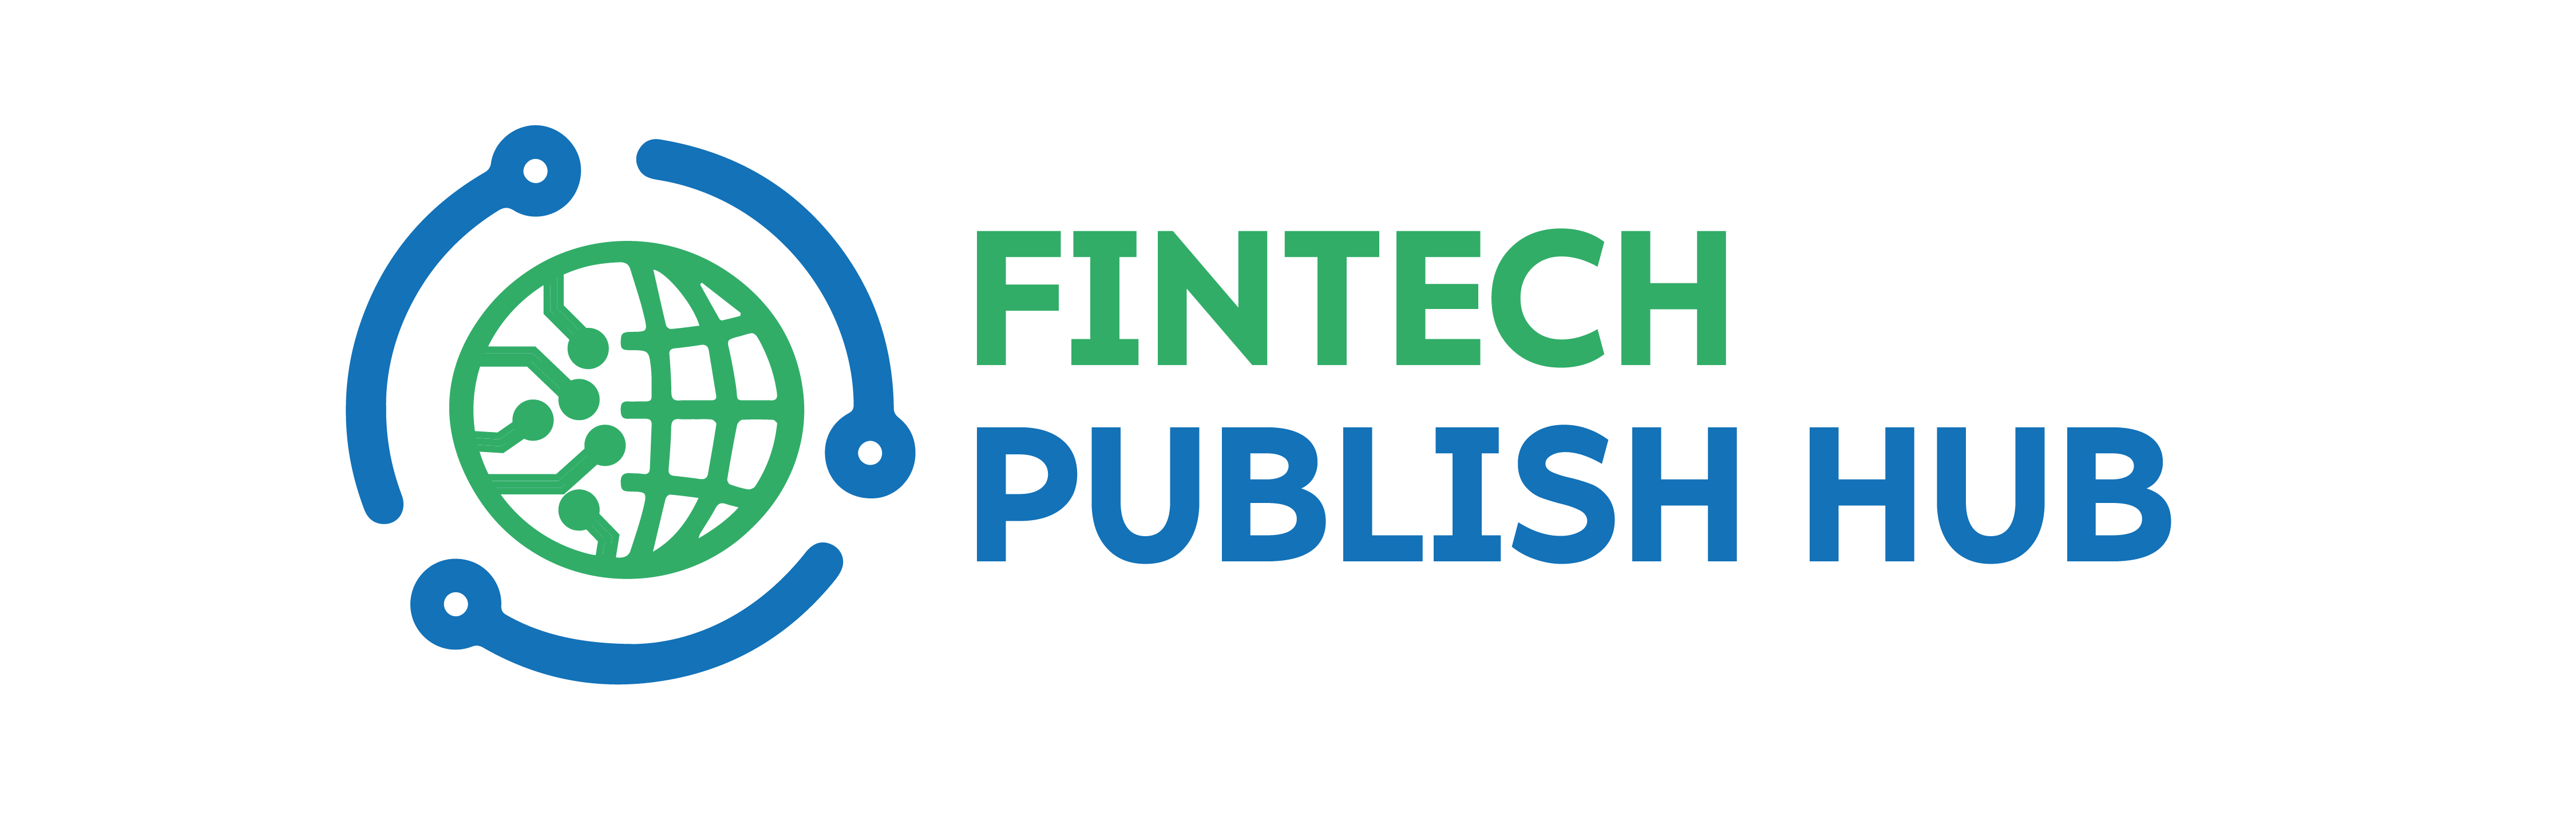 FinTech Publish Hub